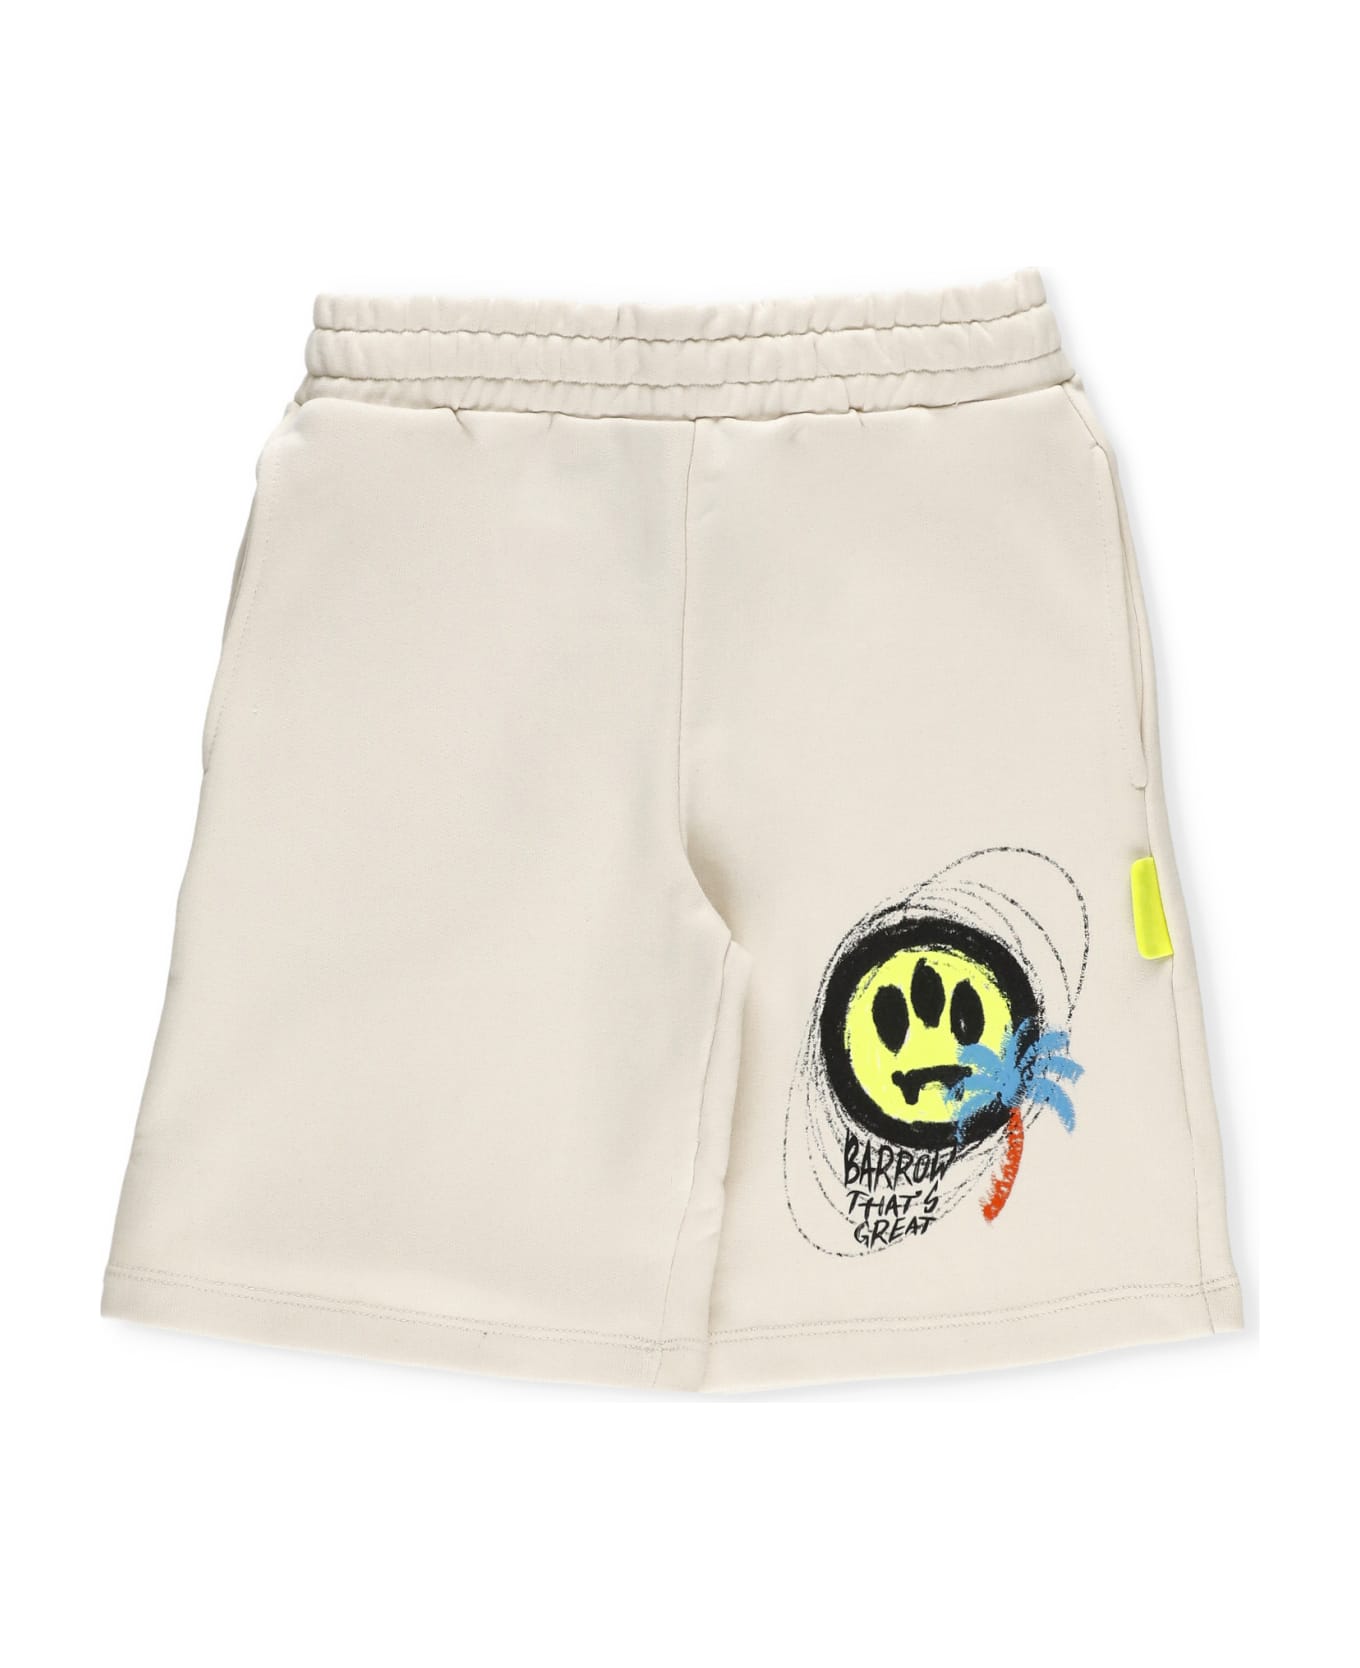 Barrow Shorts With Logo - Crema/Cream